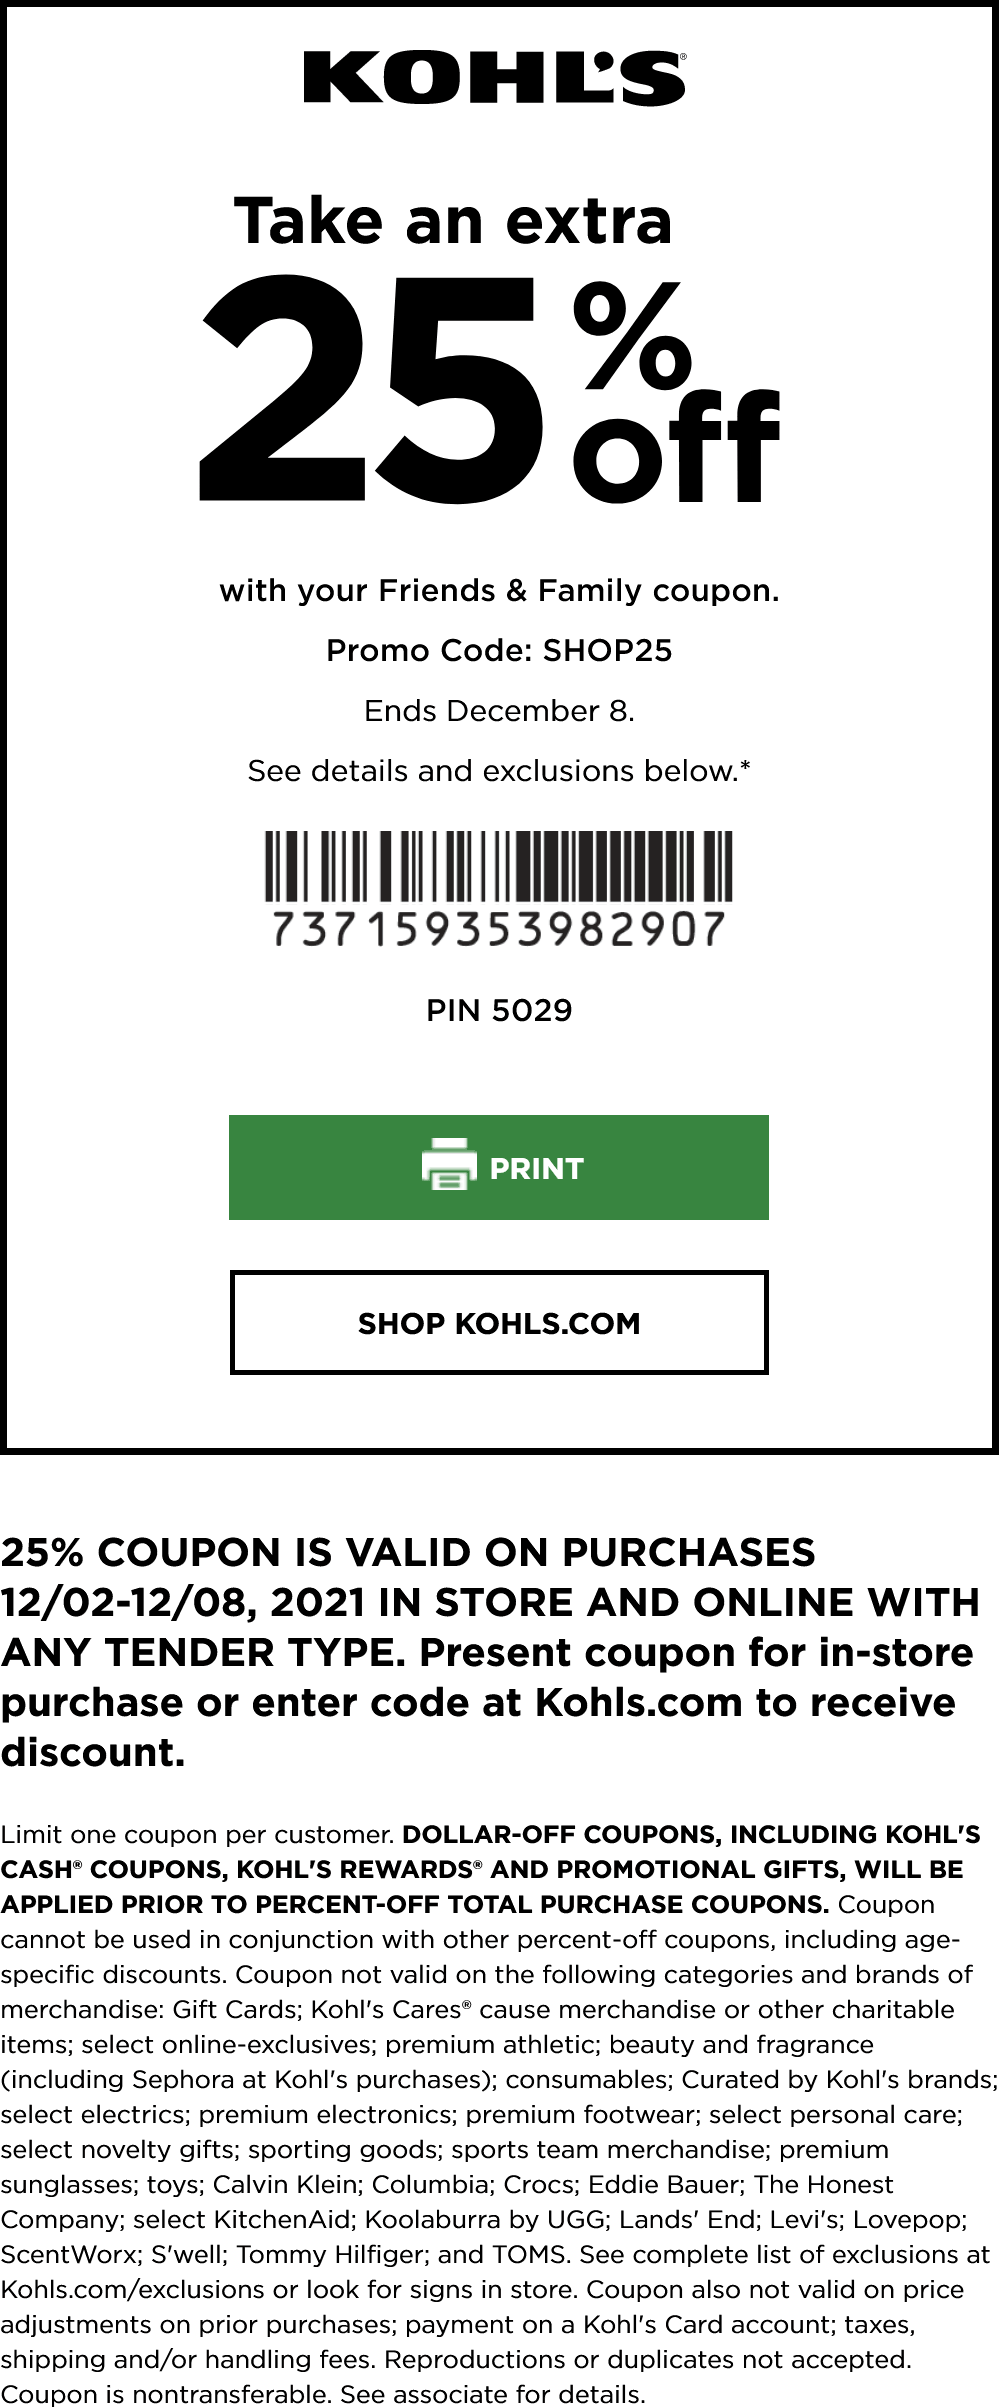 Kohls coupons & promo code for [December 2022]